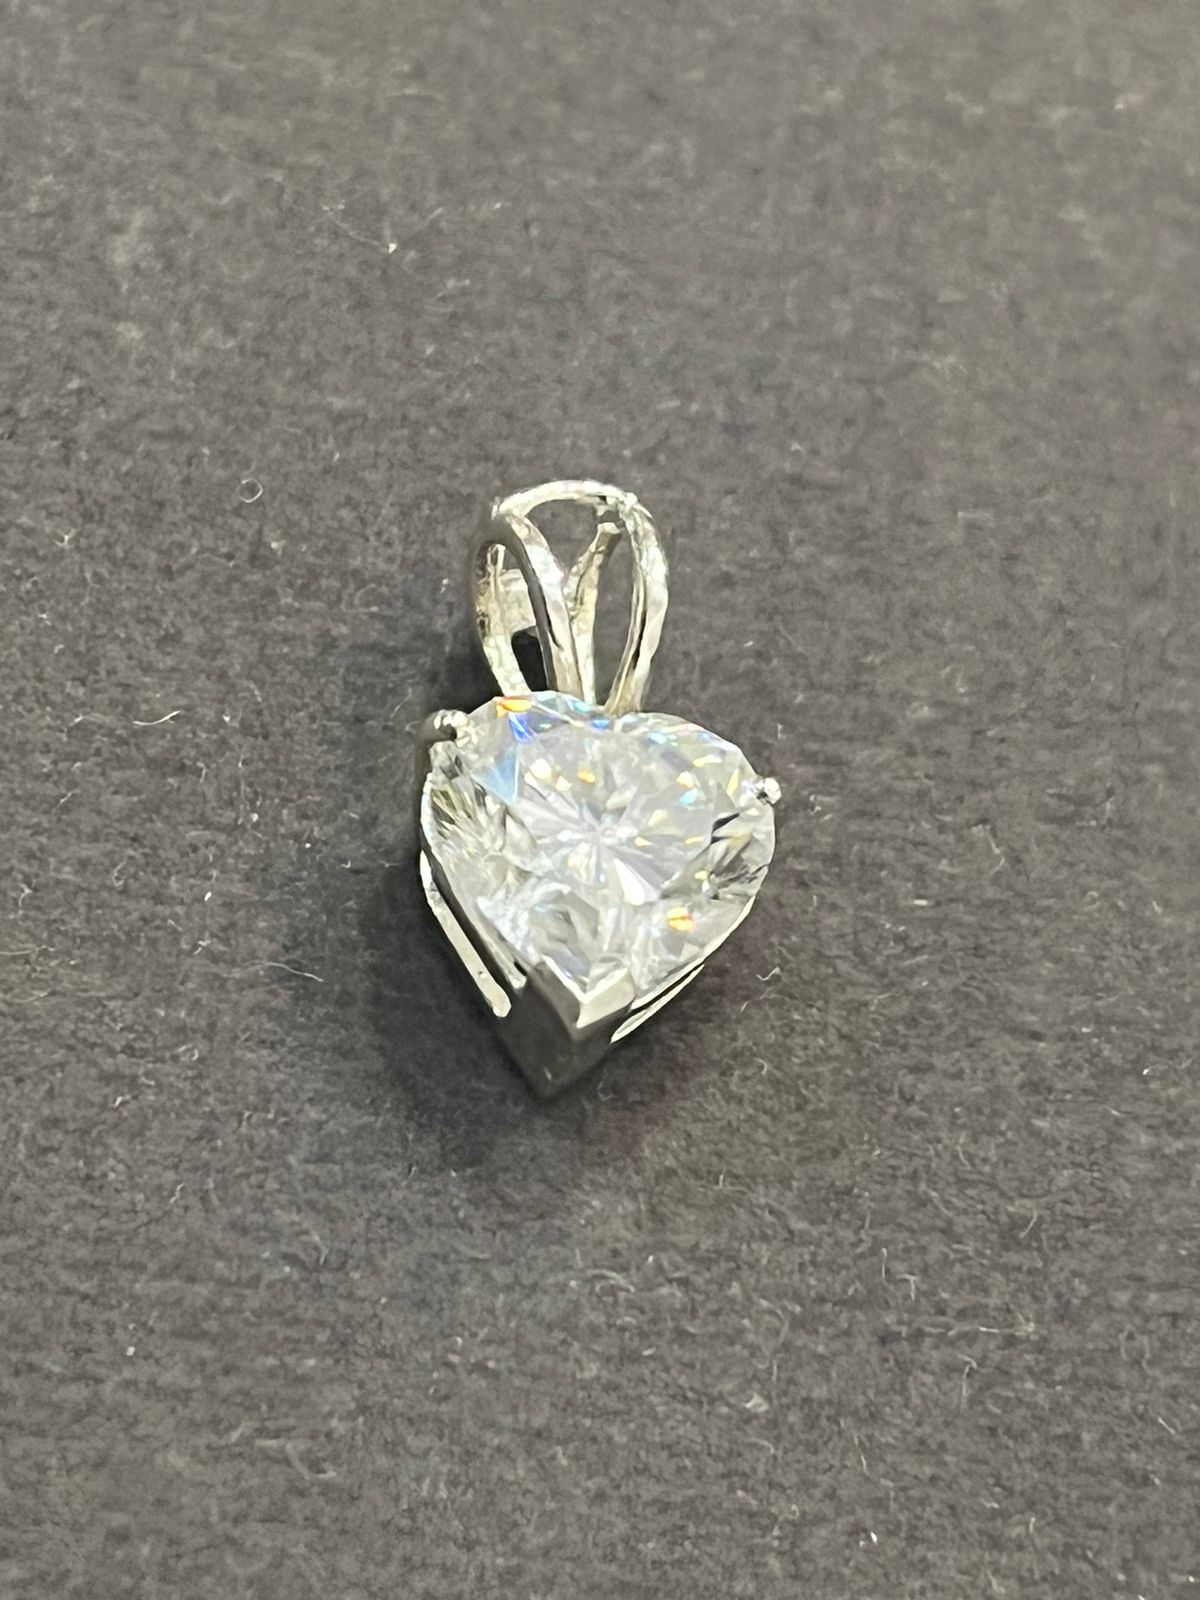 2.5 Carat Heart Shape Moissanite Diamond Pendant in 925 Silver White Gold Plated